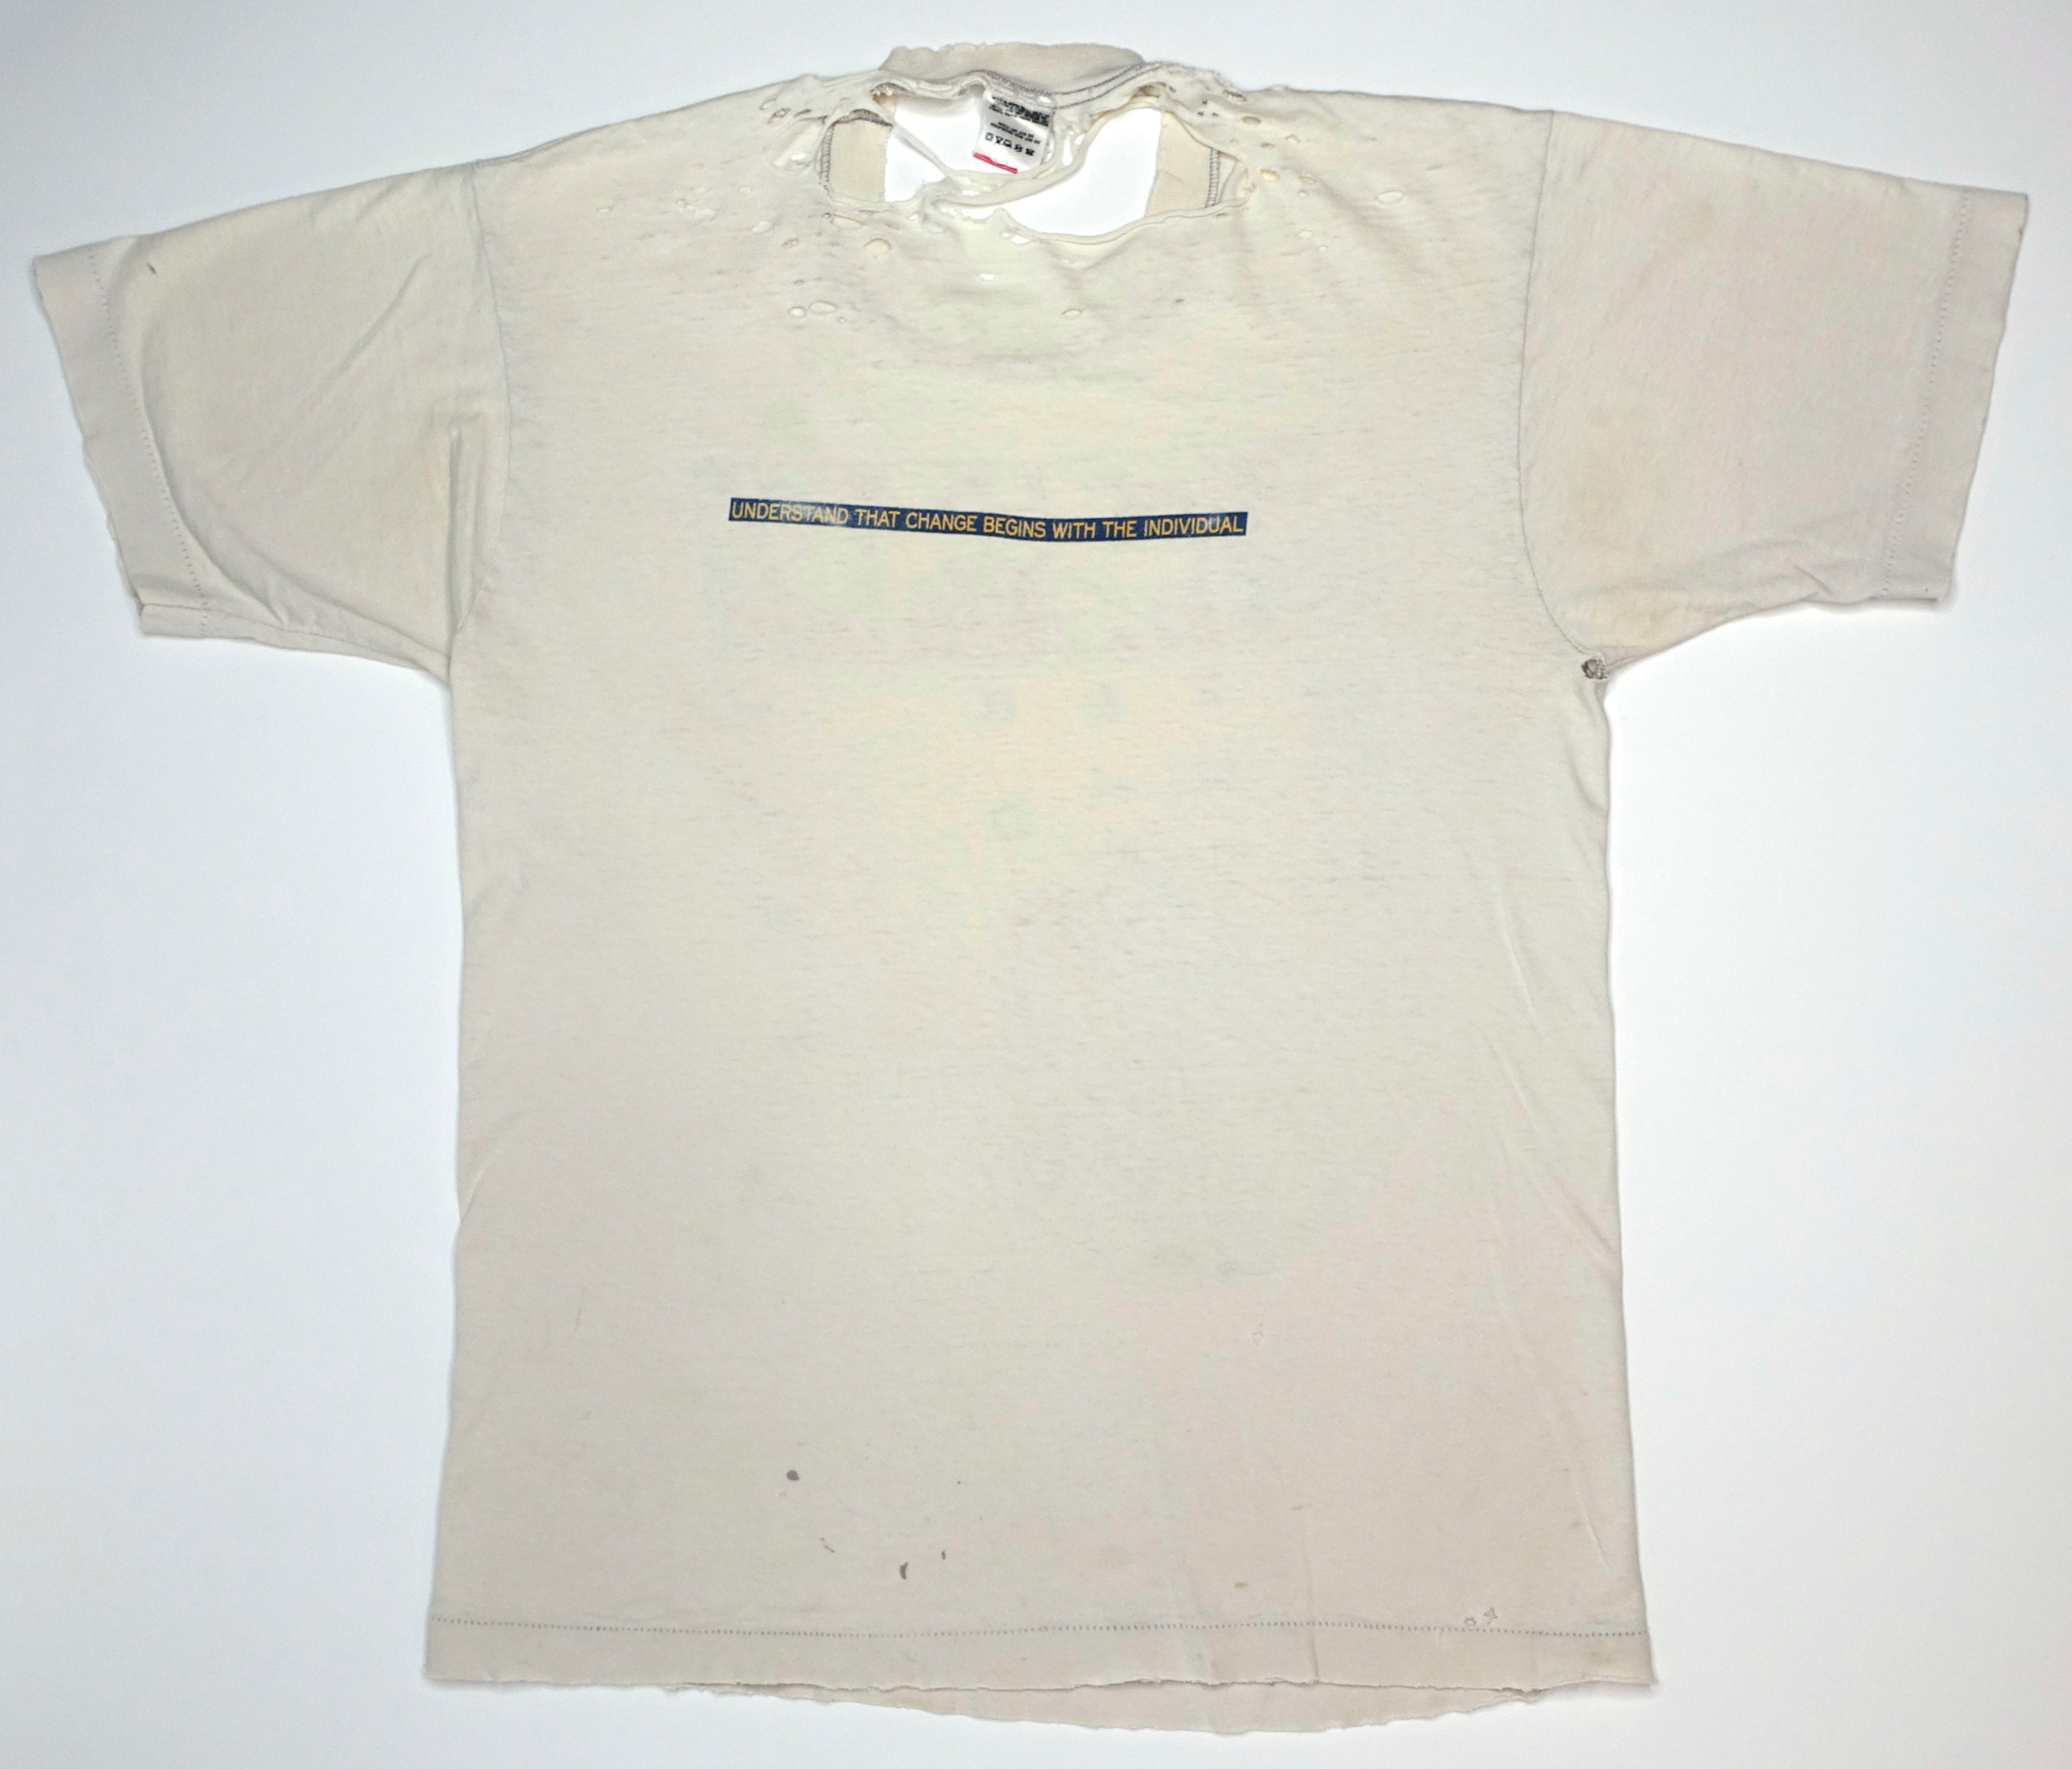 R.E.M. – Green World Fall Tour 1989 Shirt Size Large